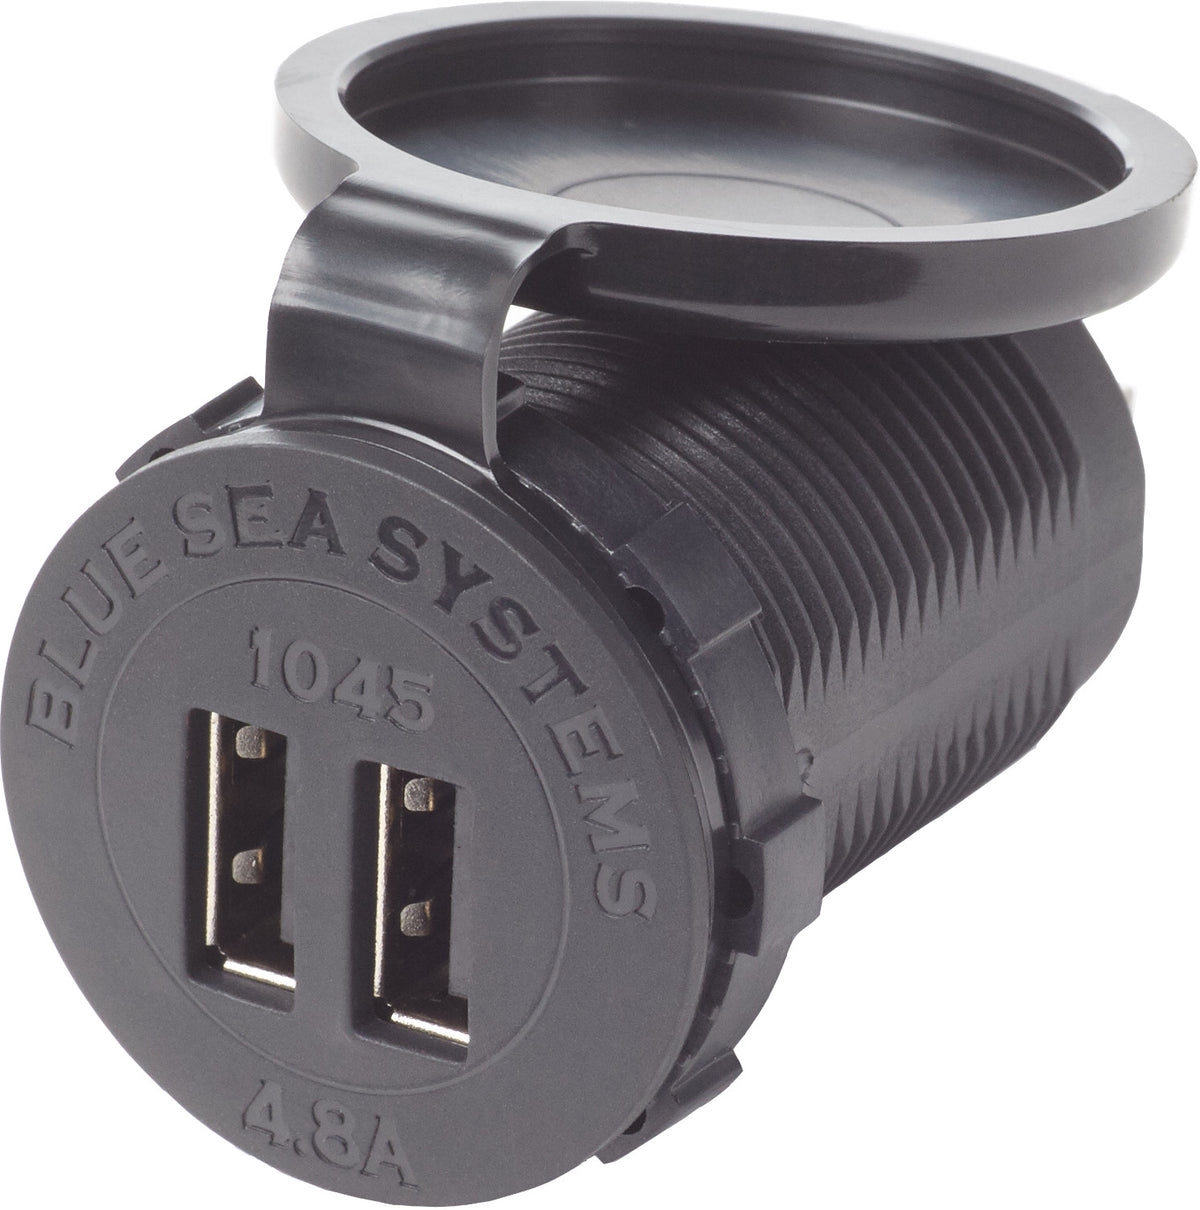 Blue Sea Dual USB 4.8A Charger Port 12/24vDC Socket Mount